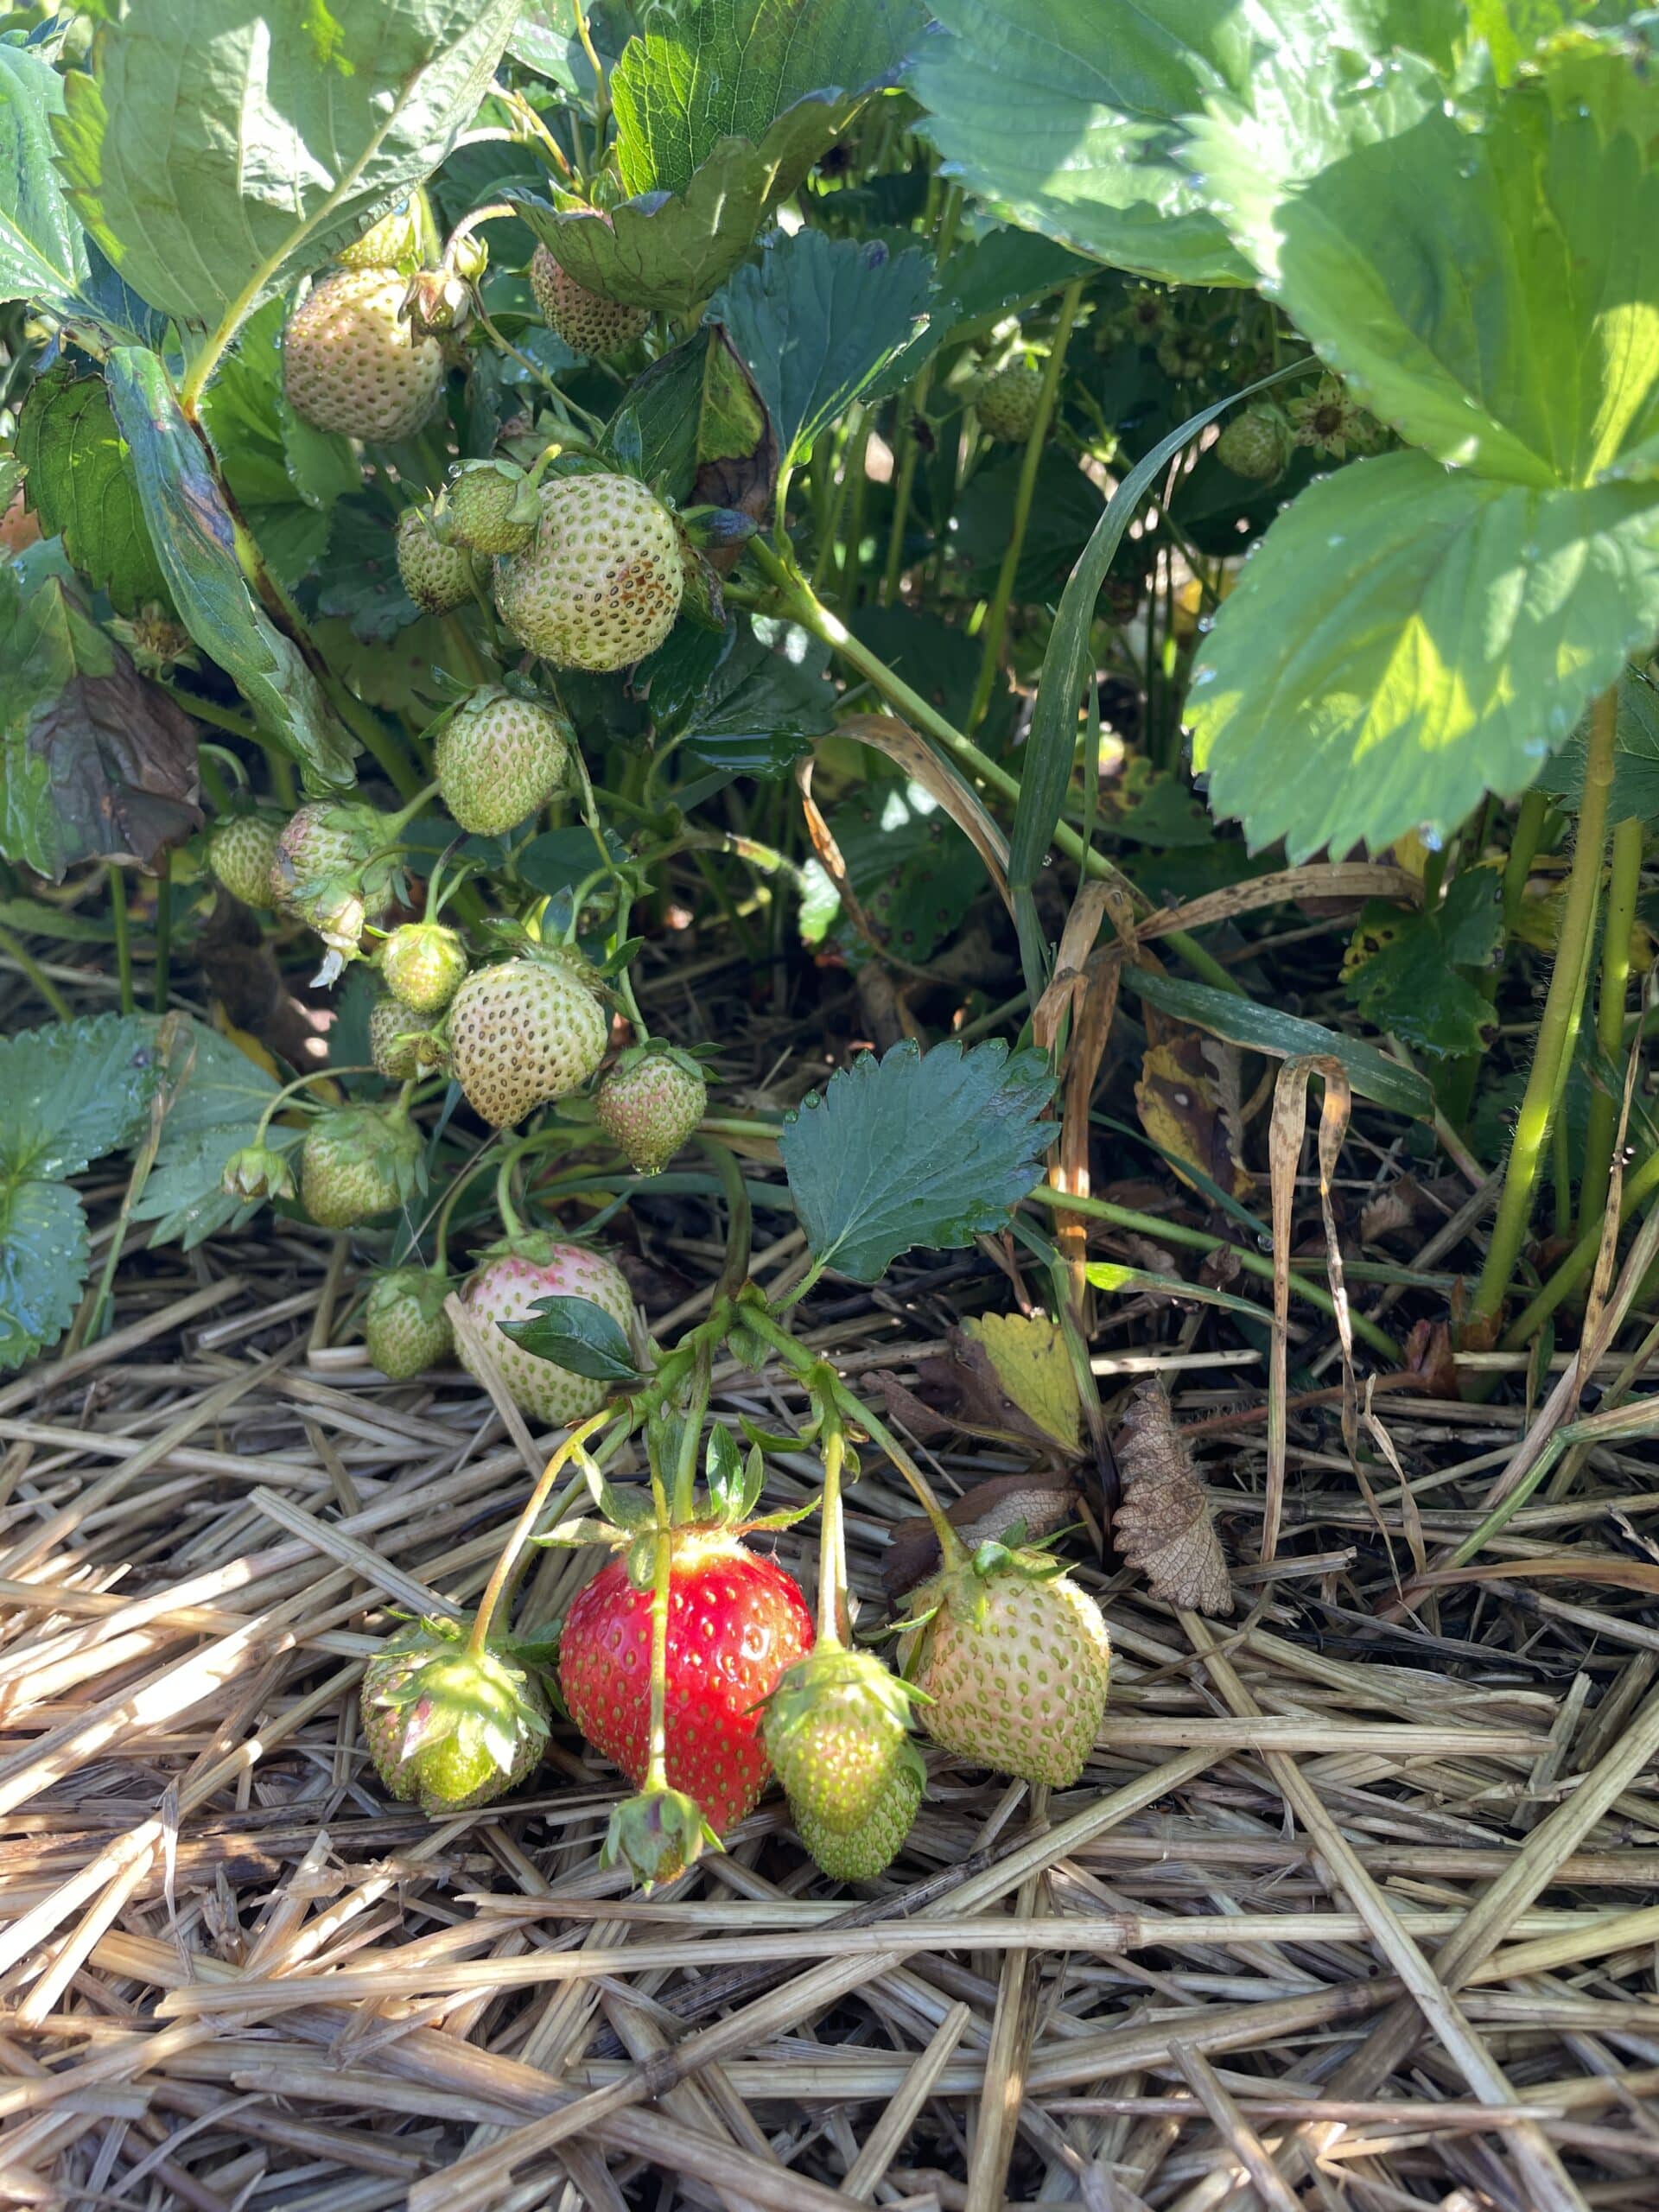 Galetta strawberries getting ripe